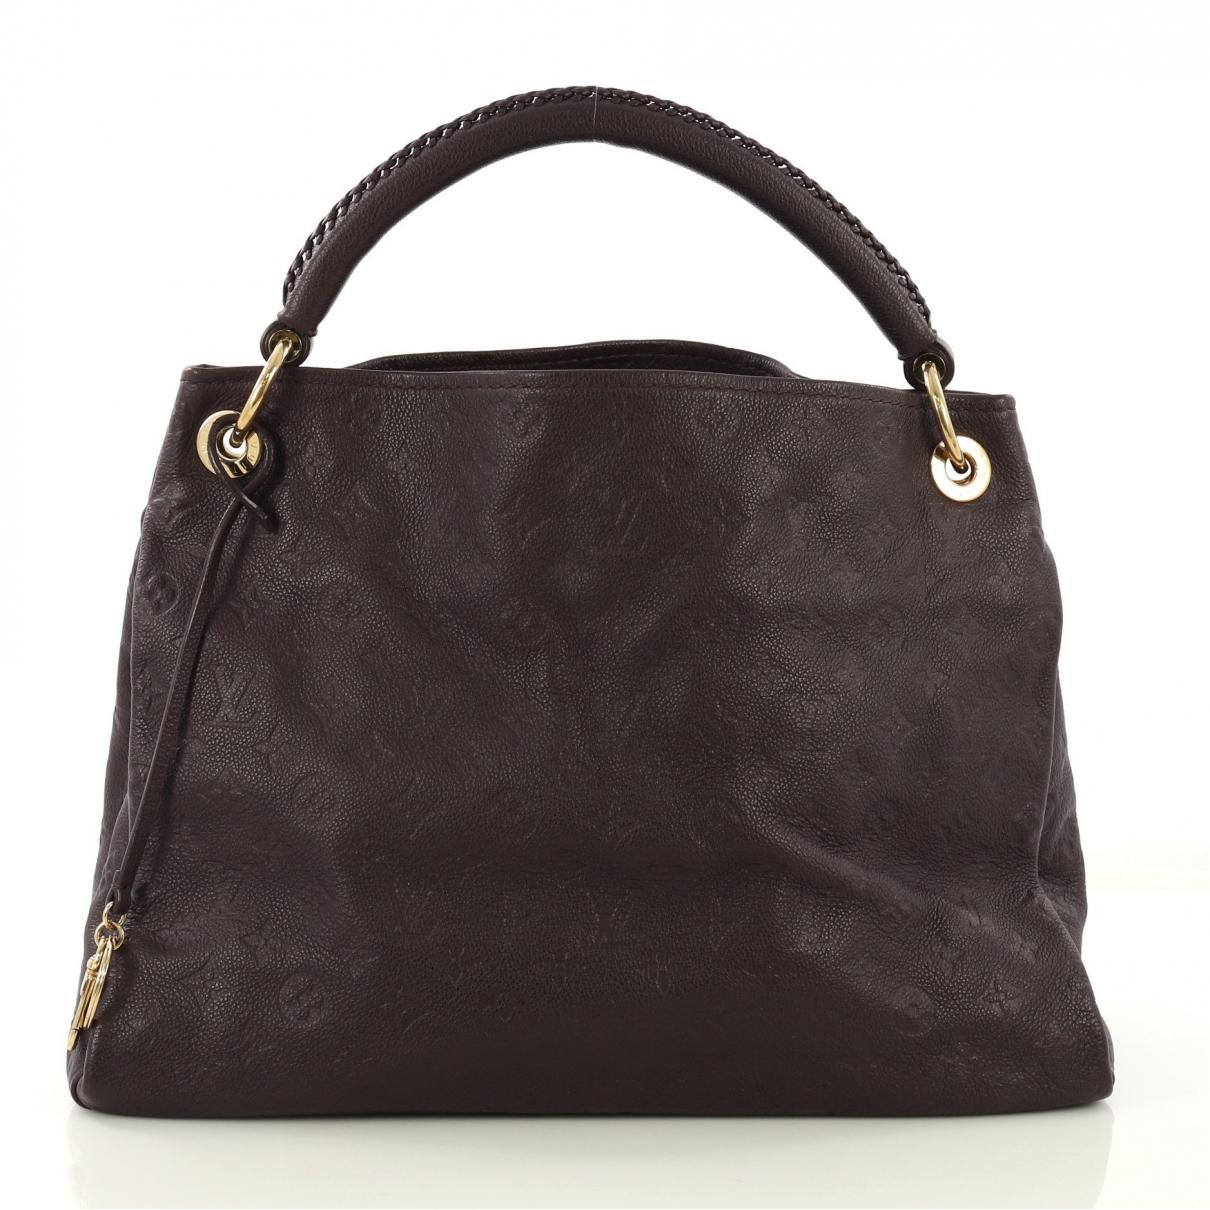 Louis Vuitton Artsy Leather Handbag in Purple - Lyst